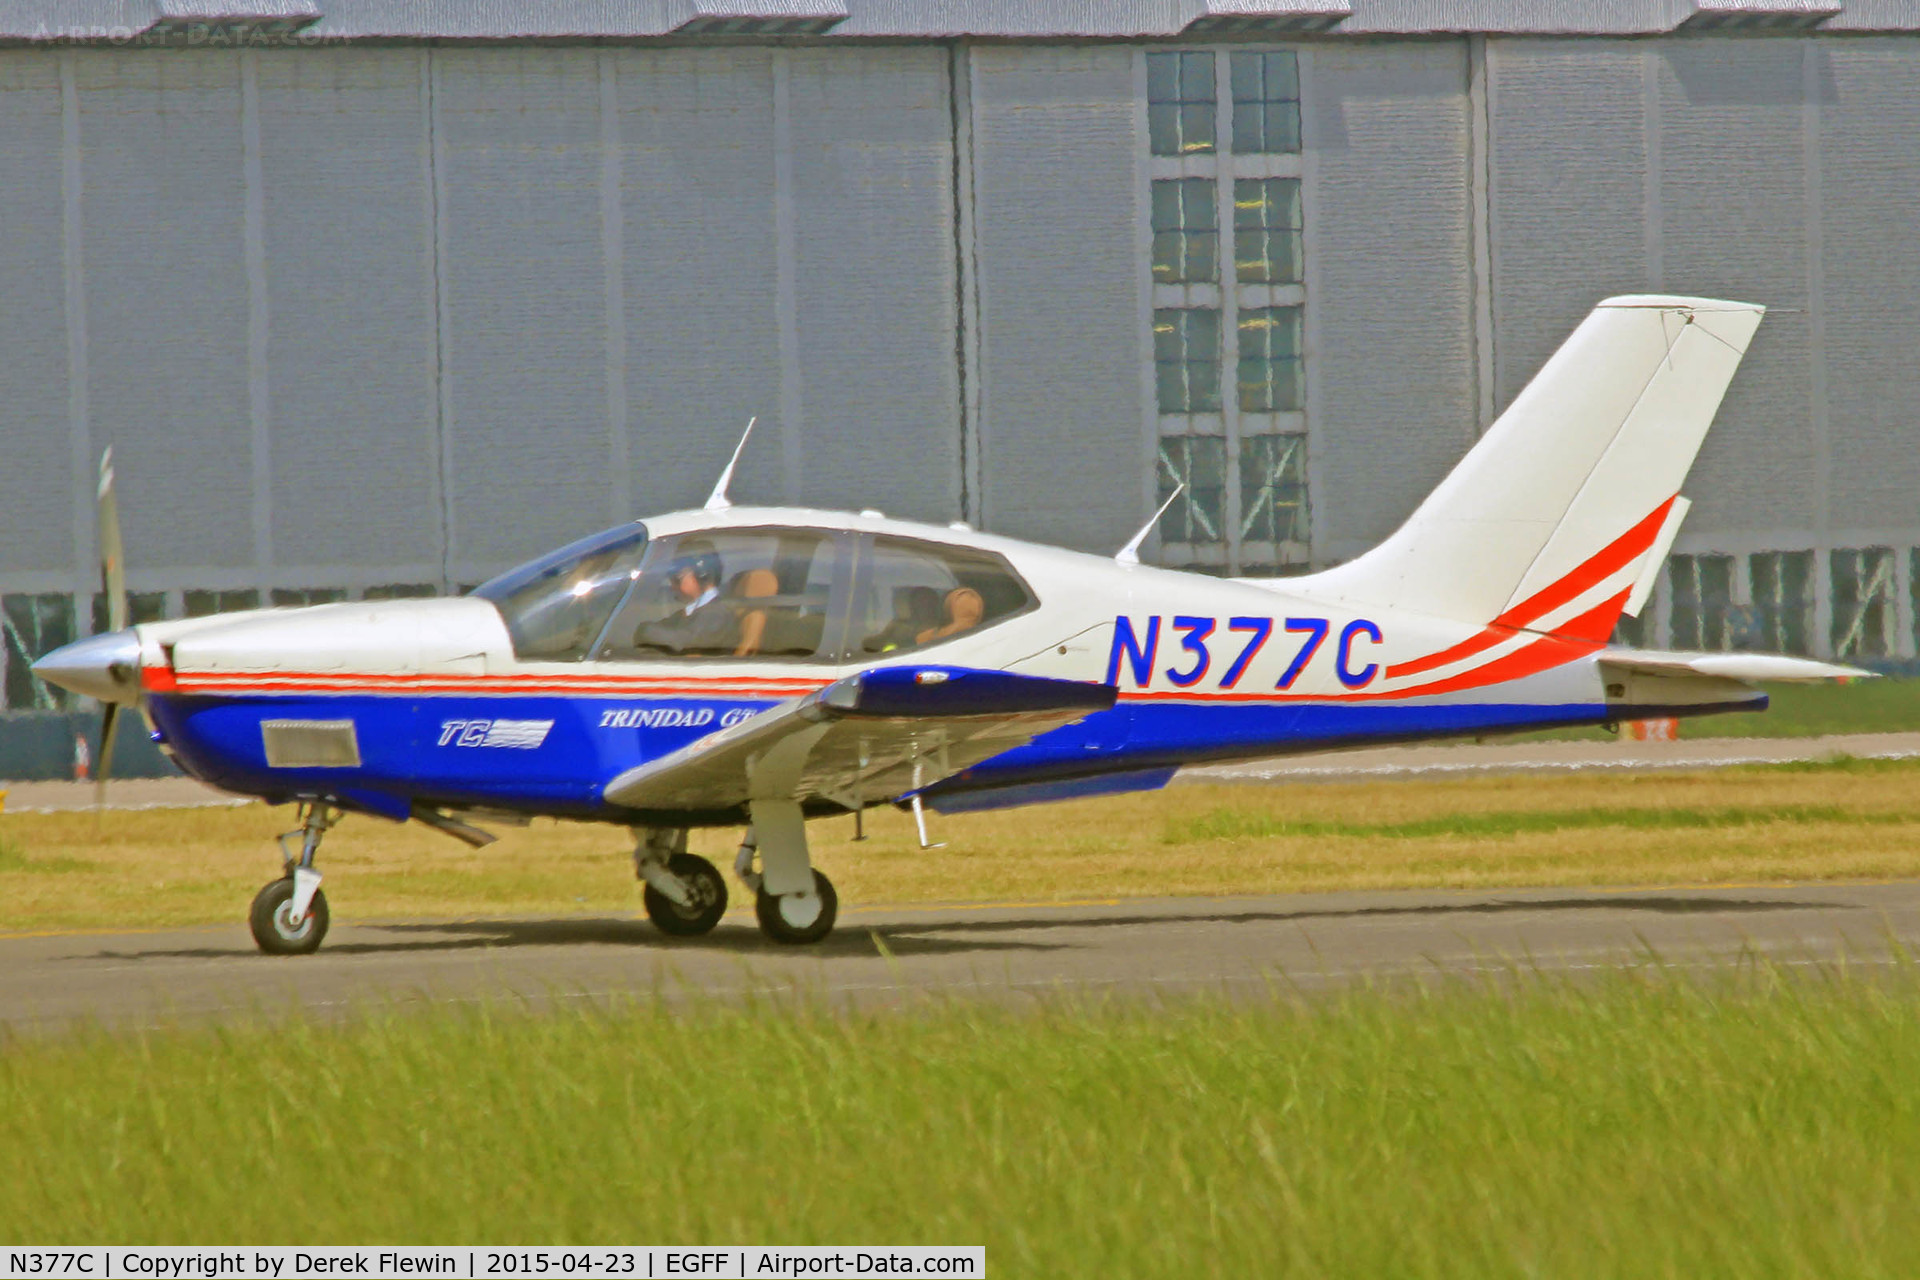 N377C, 2005 Socata TB-21 GT TC Trinidad C/N 2222, Visiting Trinidad TC, Booker based, seen shortly after landing on runway 12.